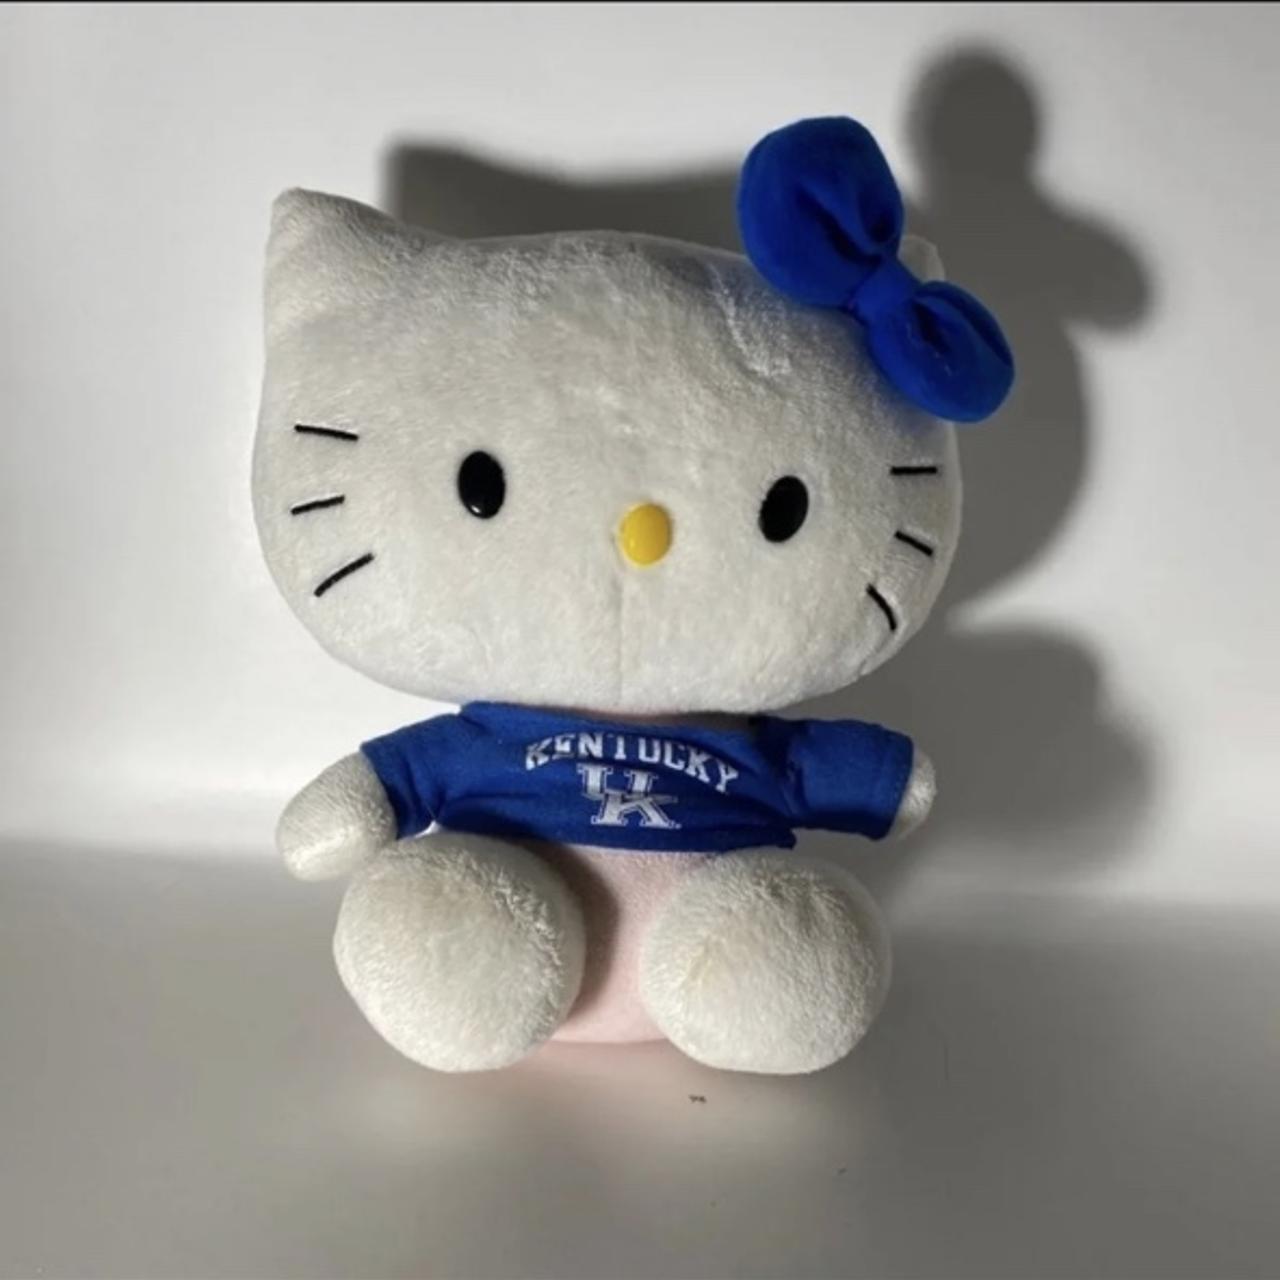 Product Image 1 - Hello Kitty plush wearing a